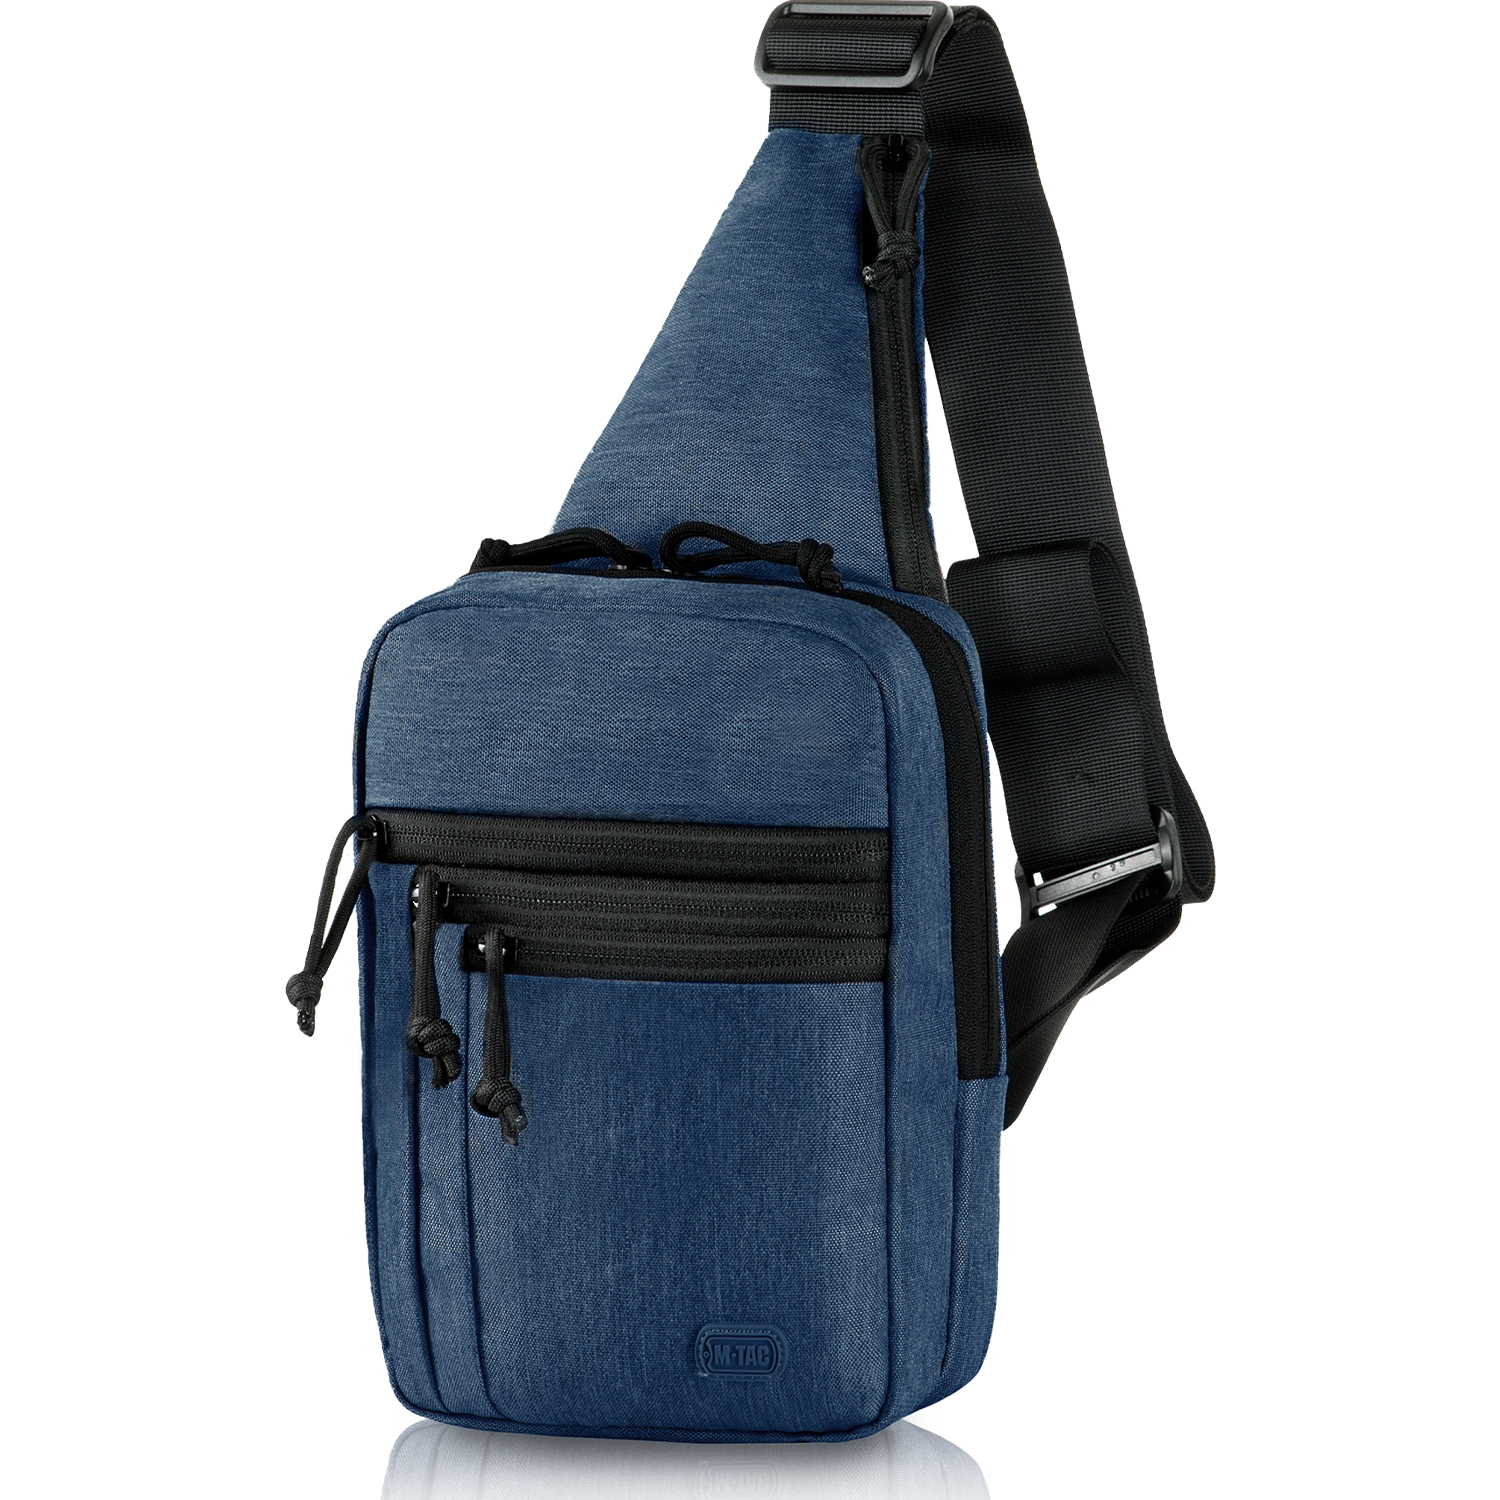 M-Tac Tactical Bag Shoulder Chest Pack with Sling and Loop Panel Black